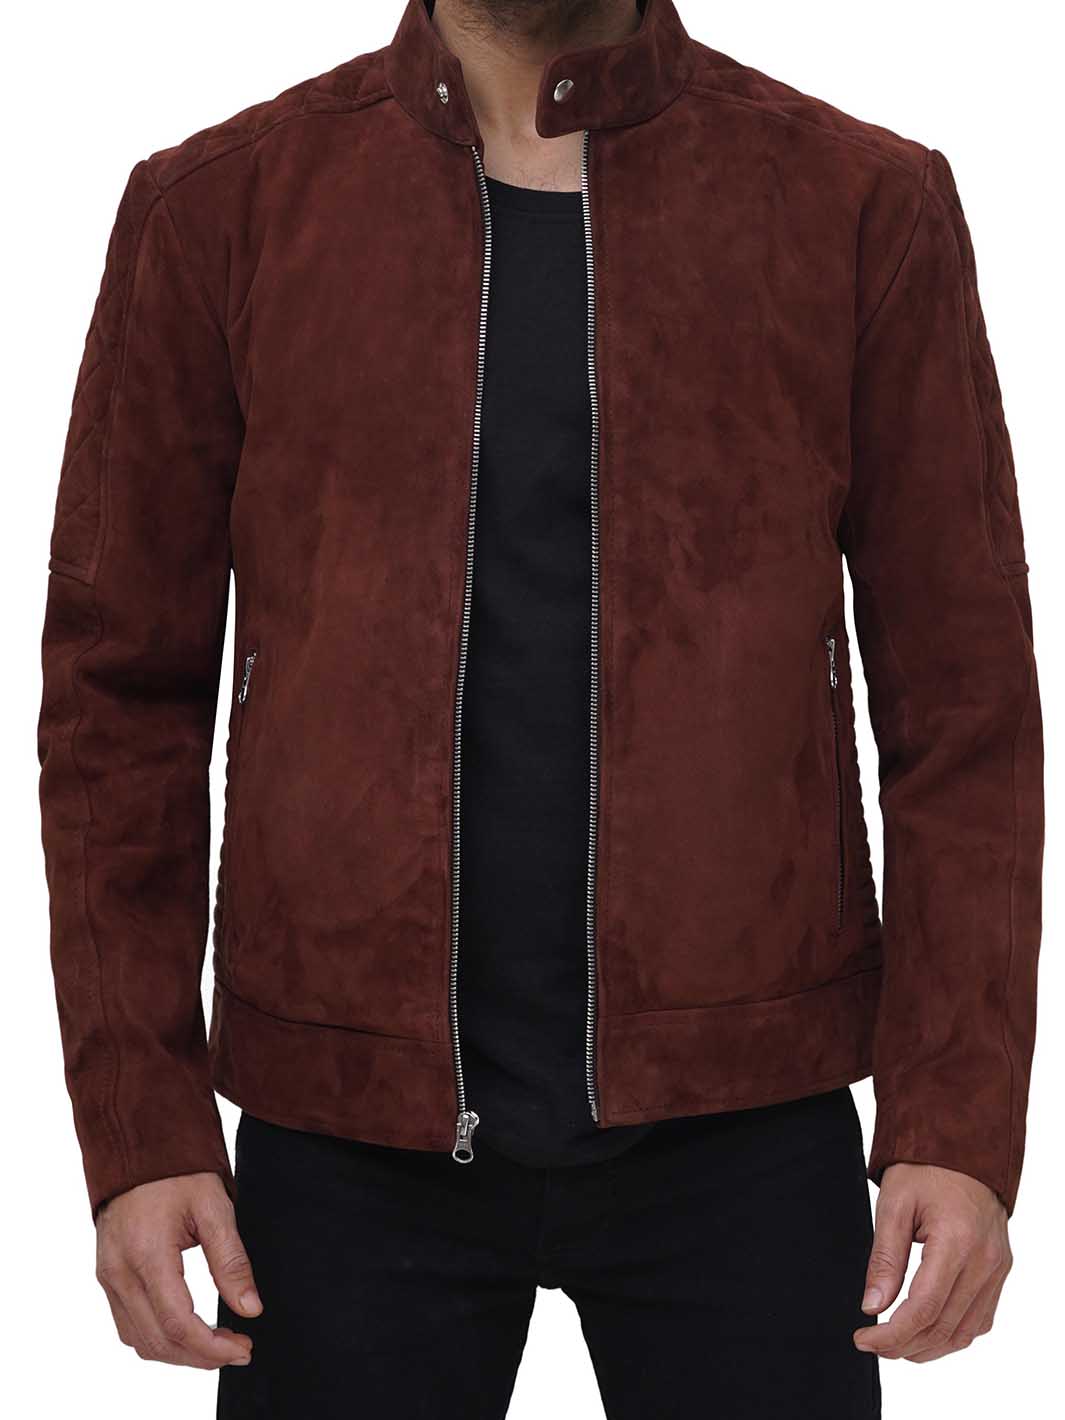 mens brown Suede Leather Jacket